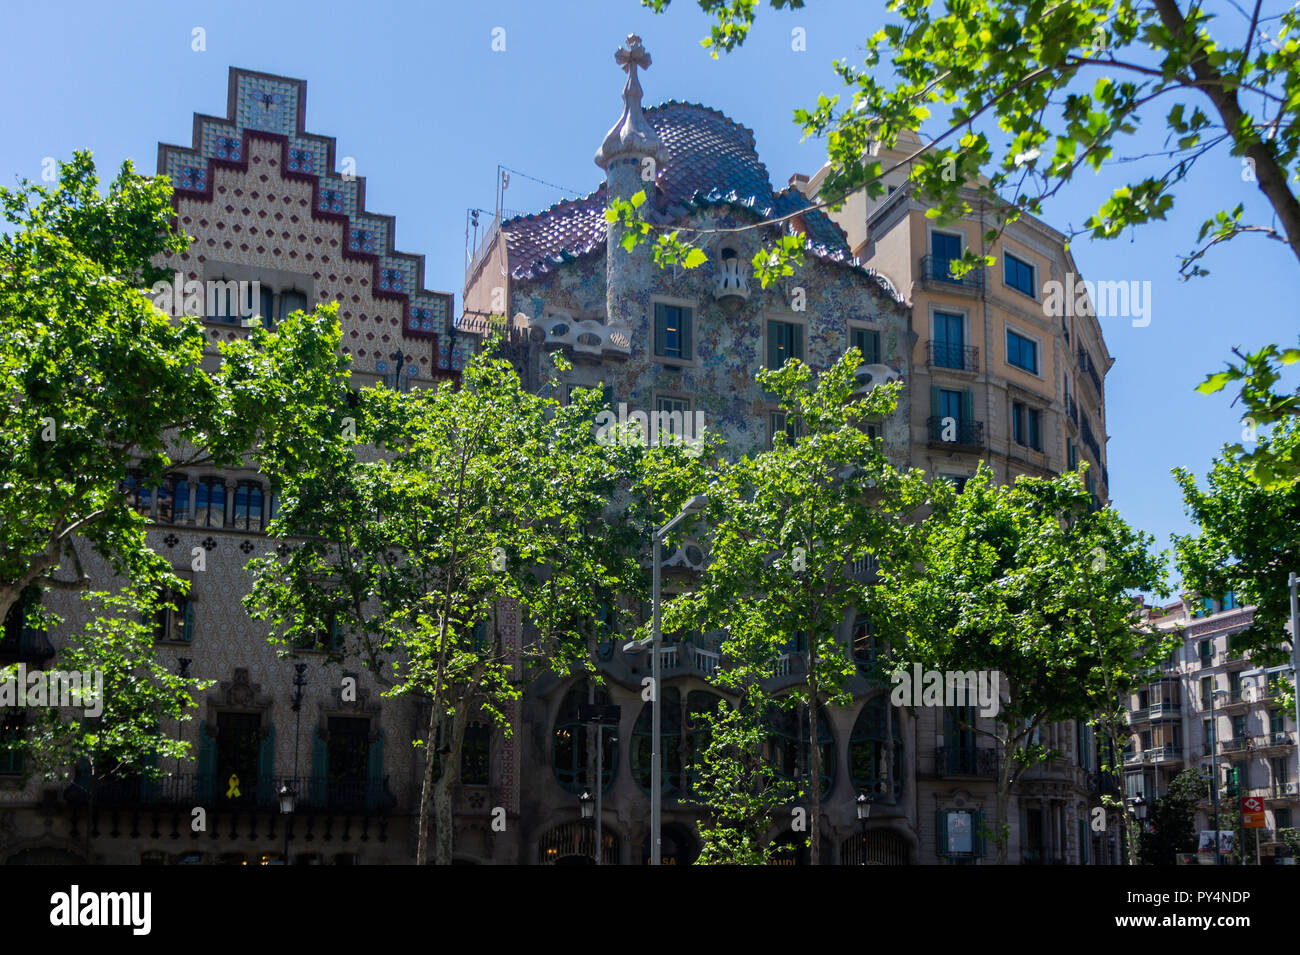 Strange architecture in Barcelona Stock Photo - Alamy